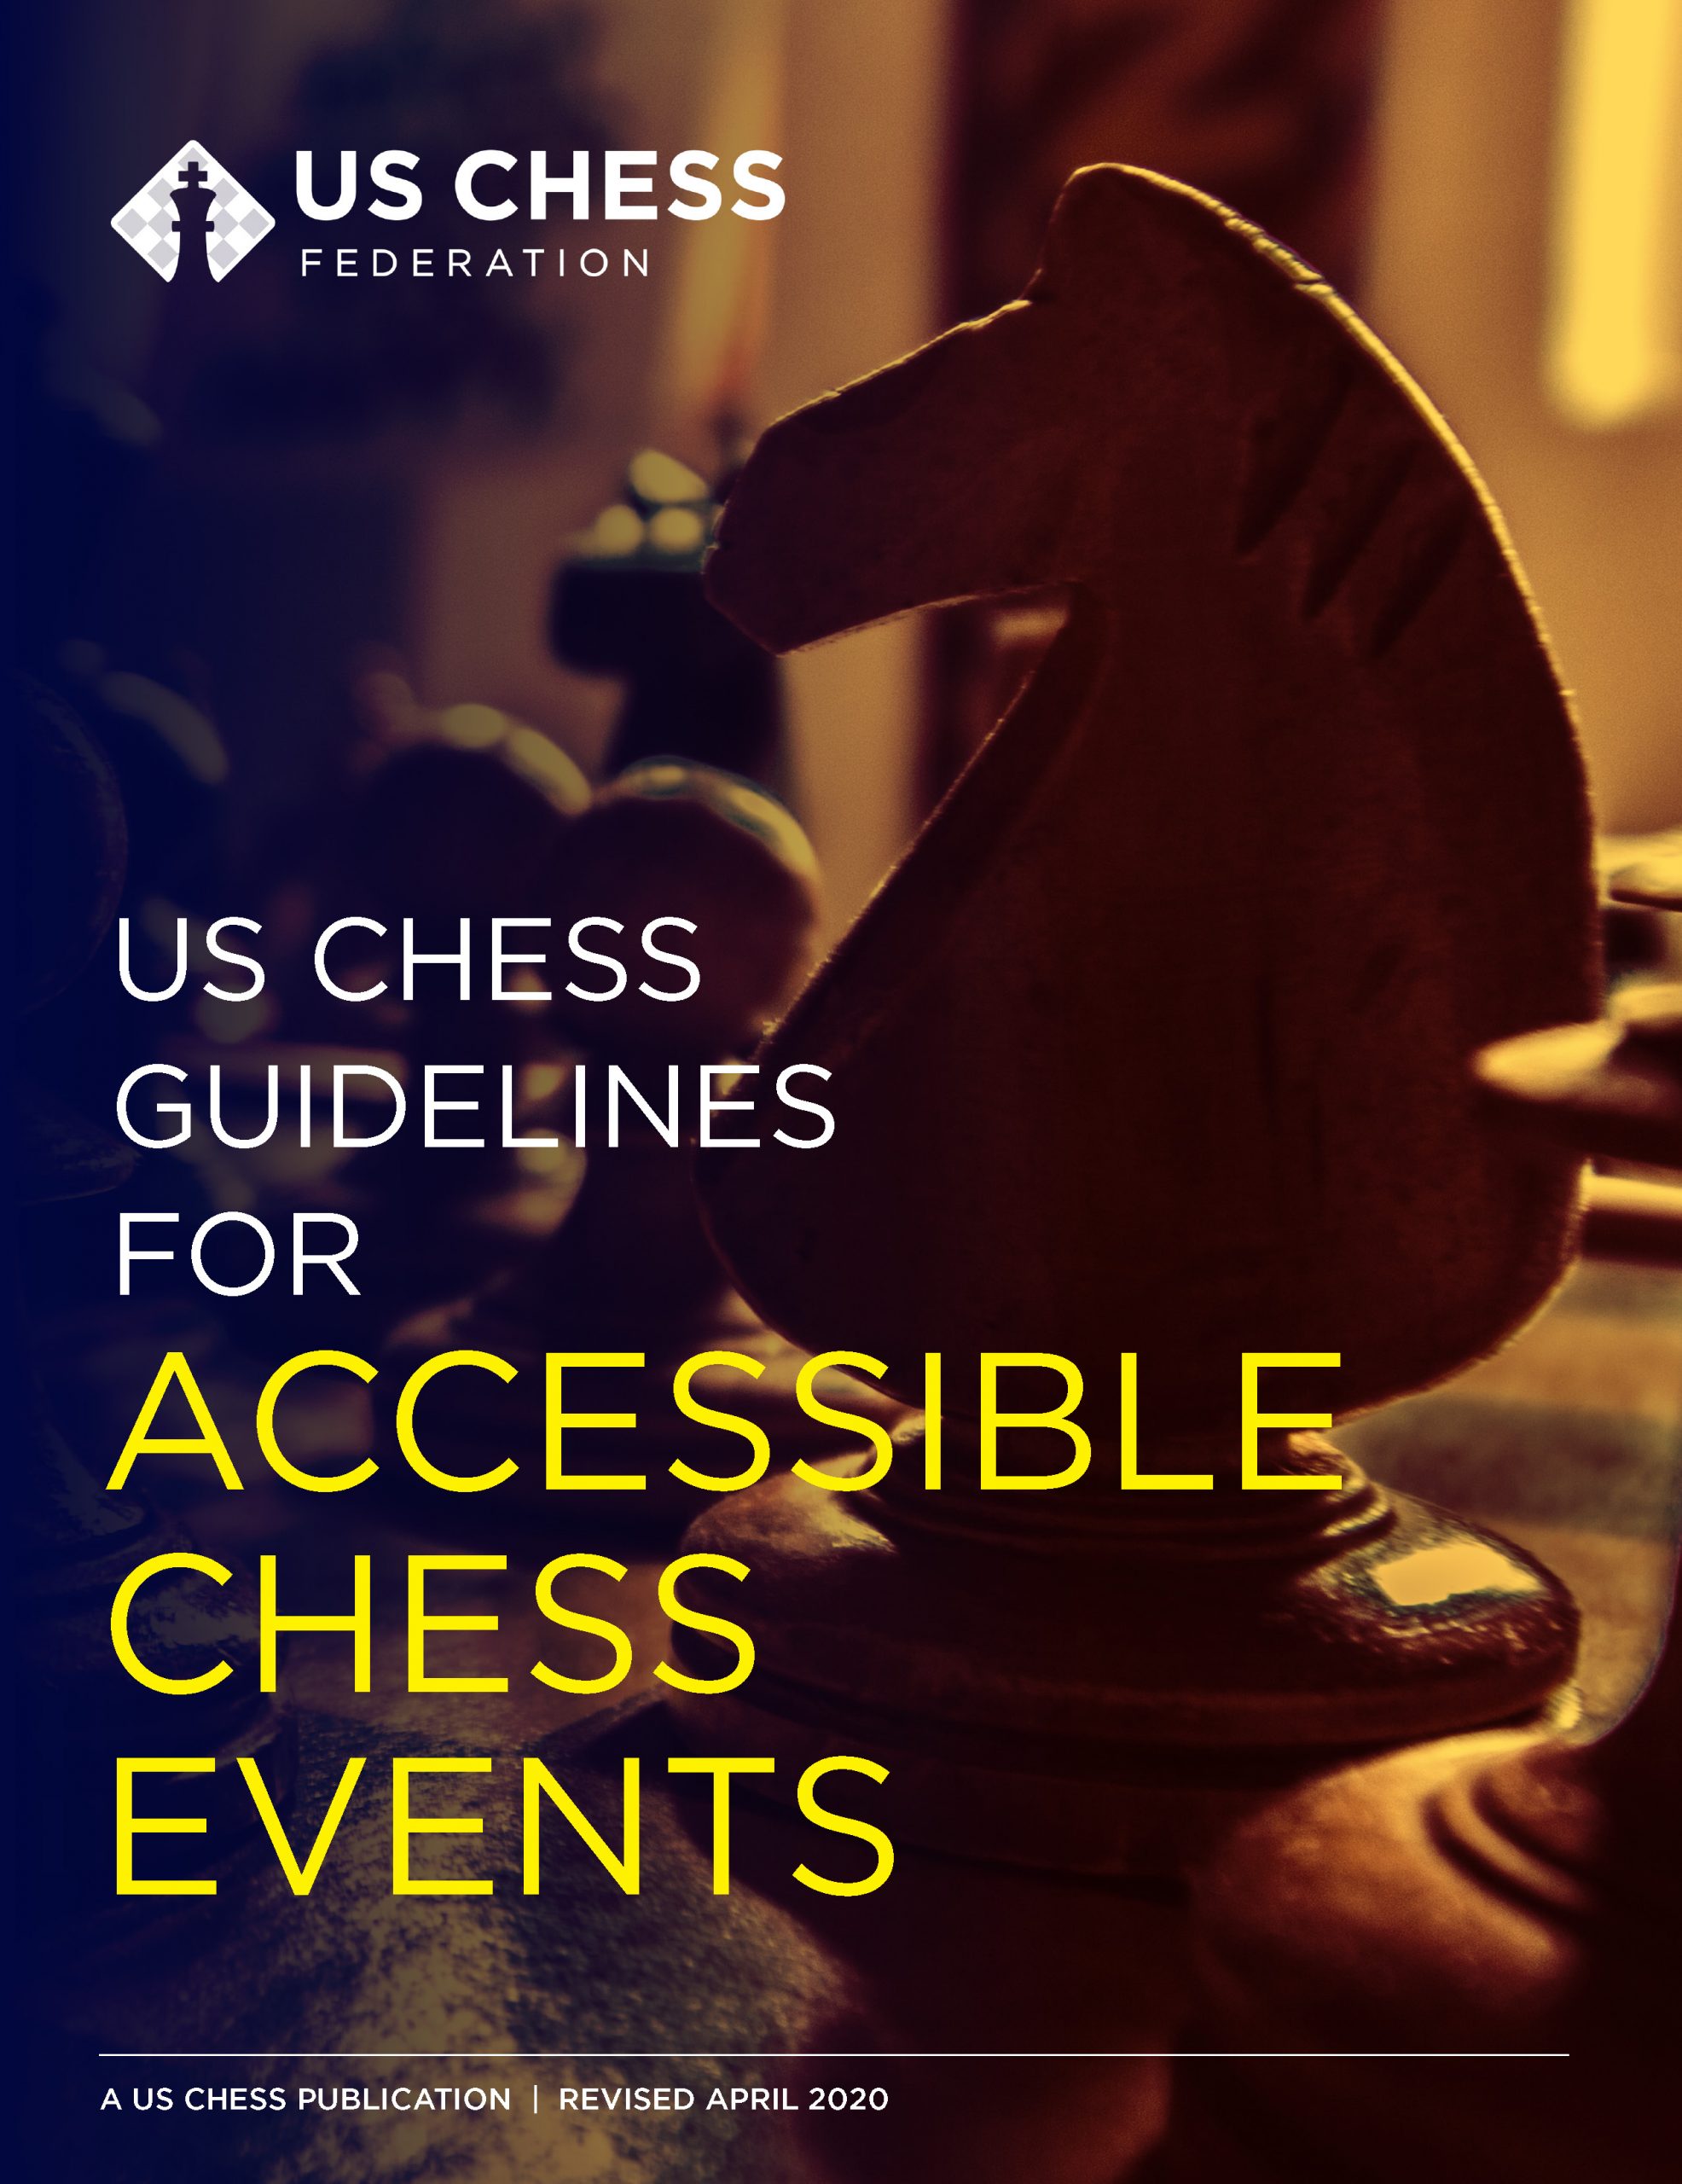 US Chess.org